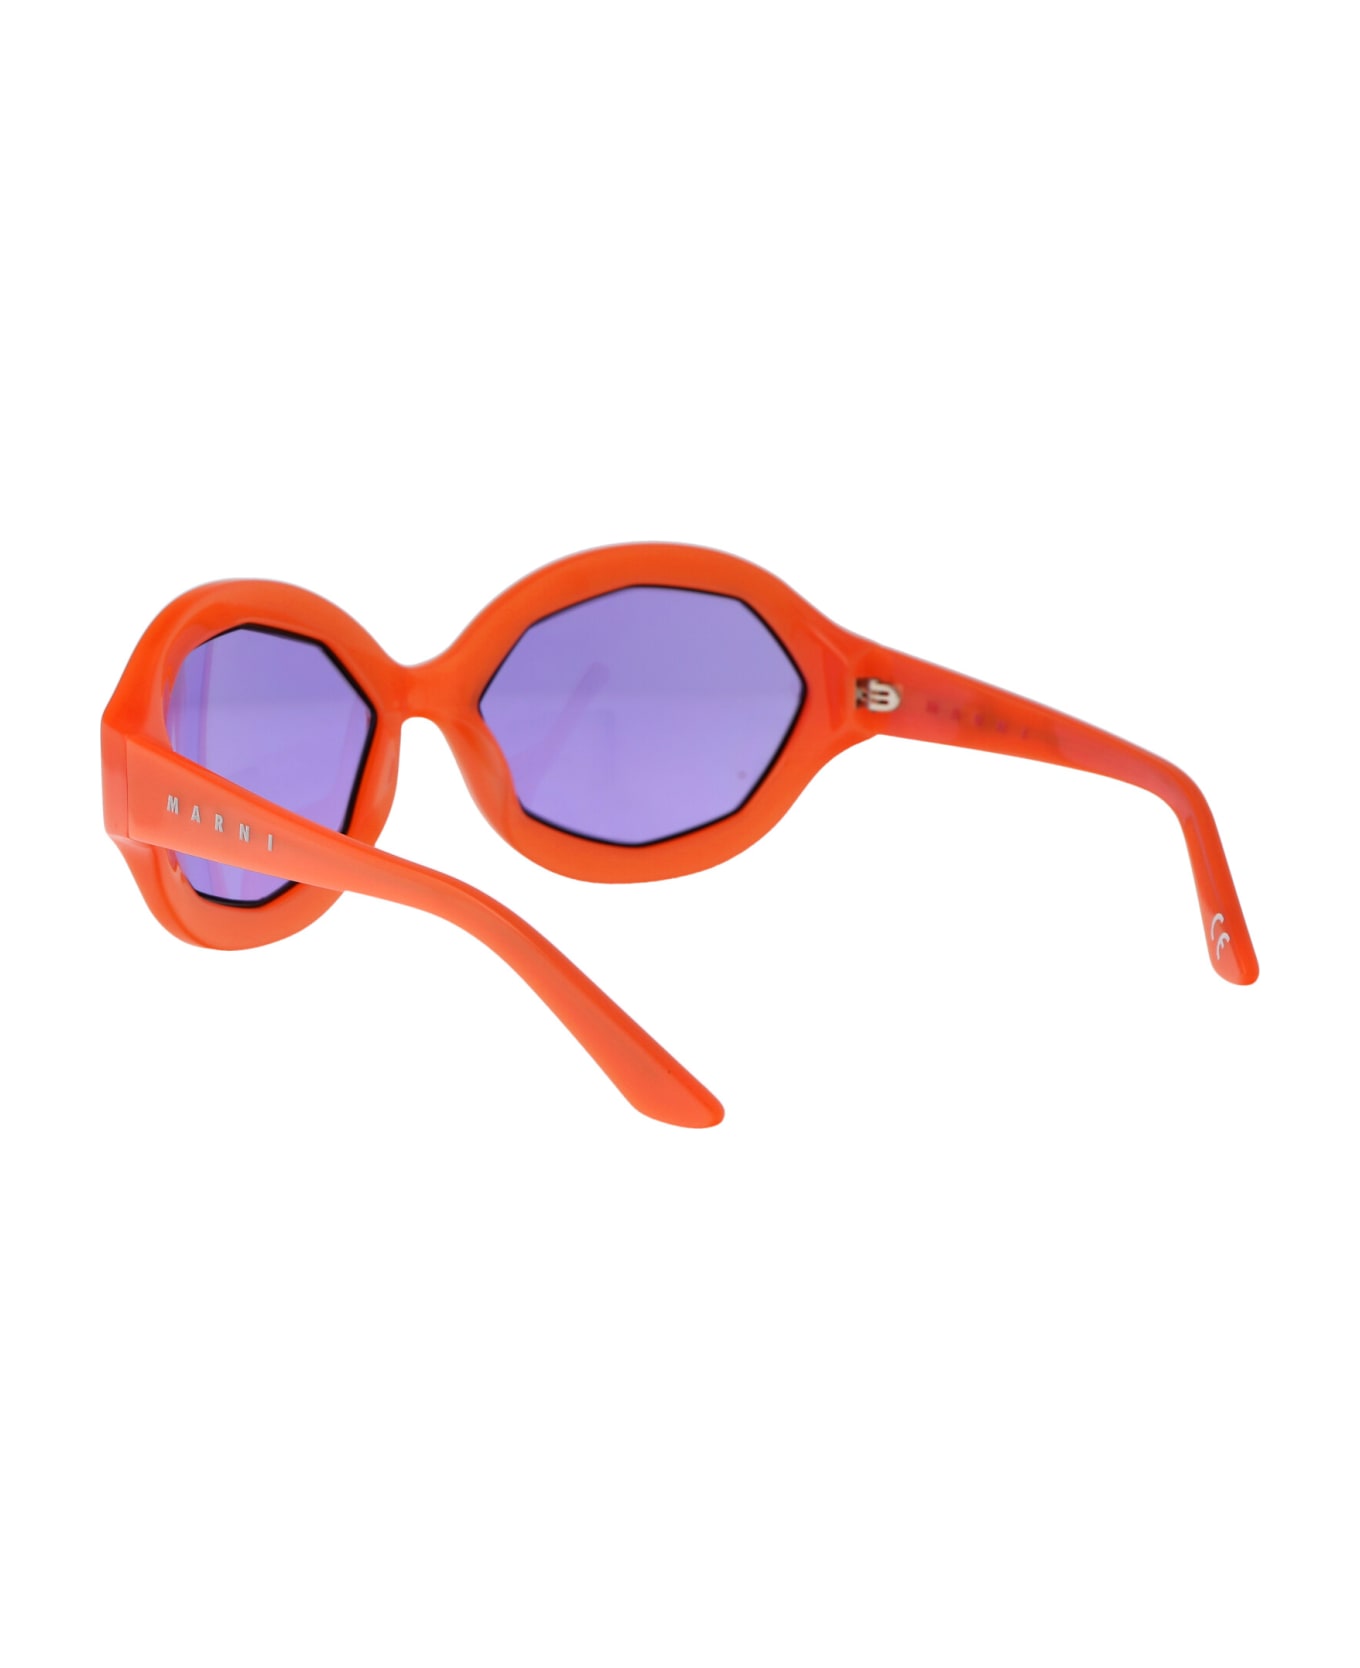 Marni Eyewear Cumulus Cloud Sunglasses - CLOUD ORANGE